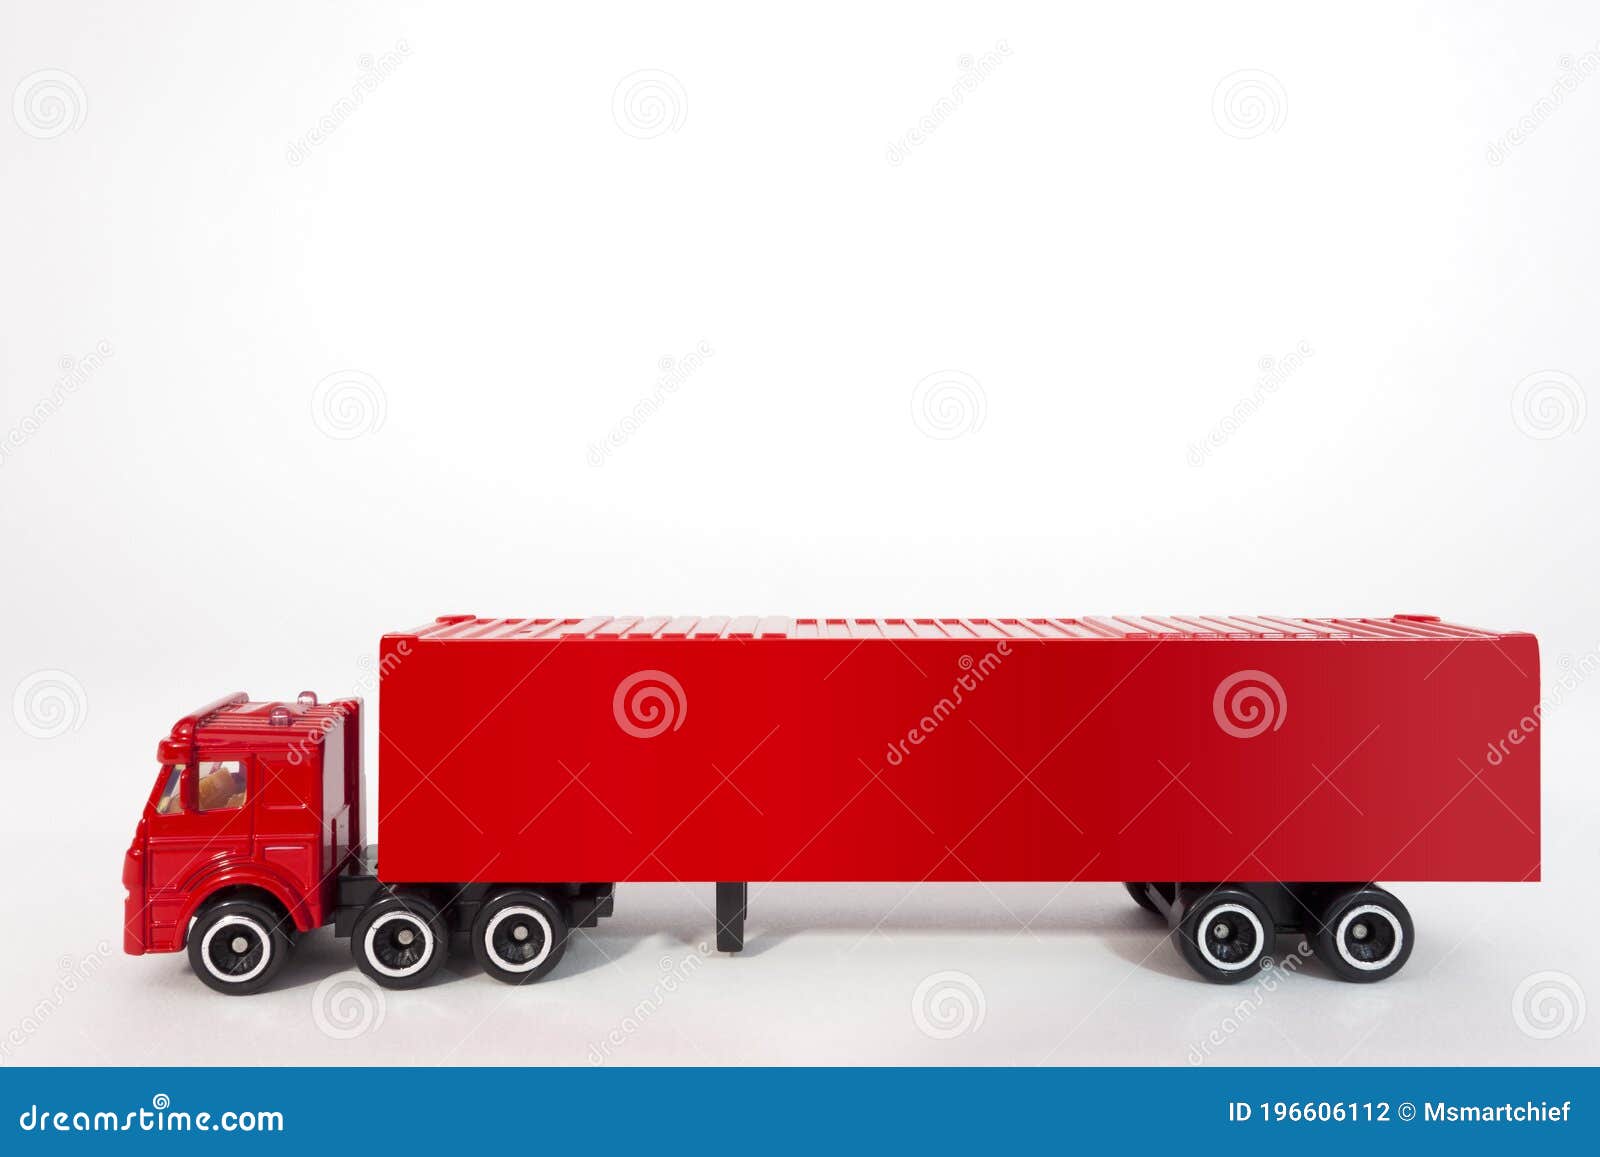 Precious cargo trailer ita